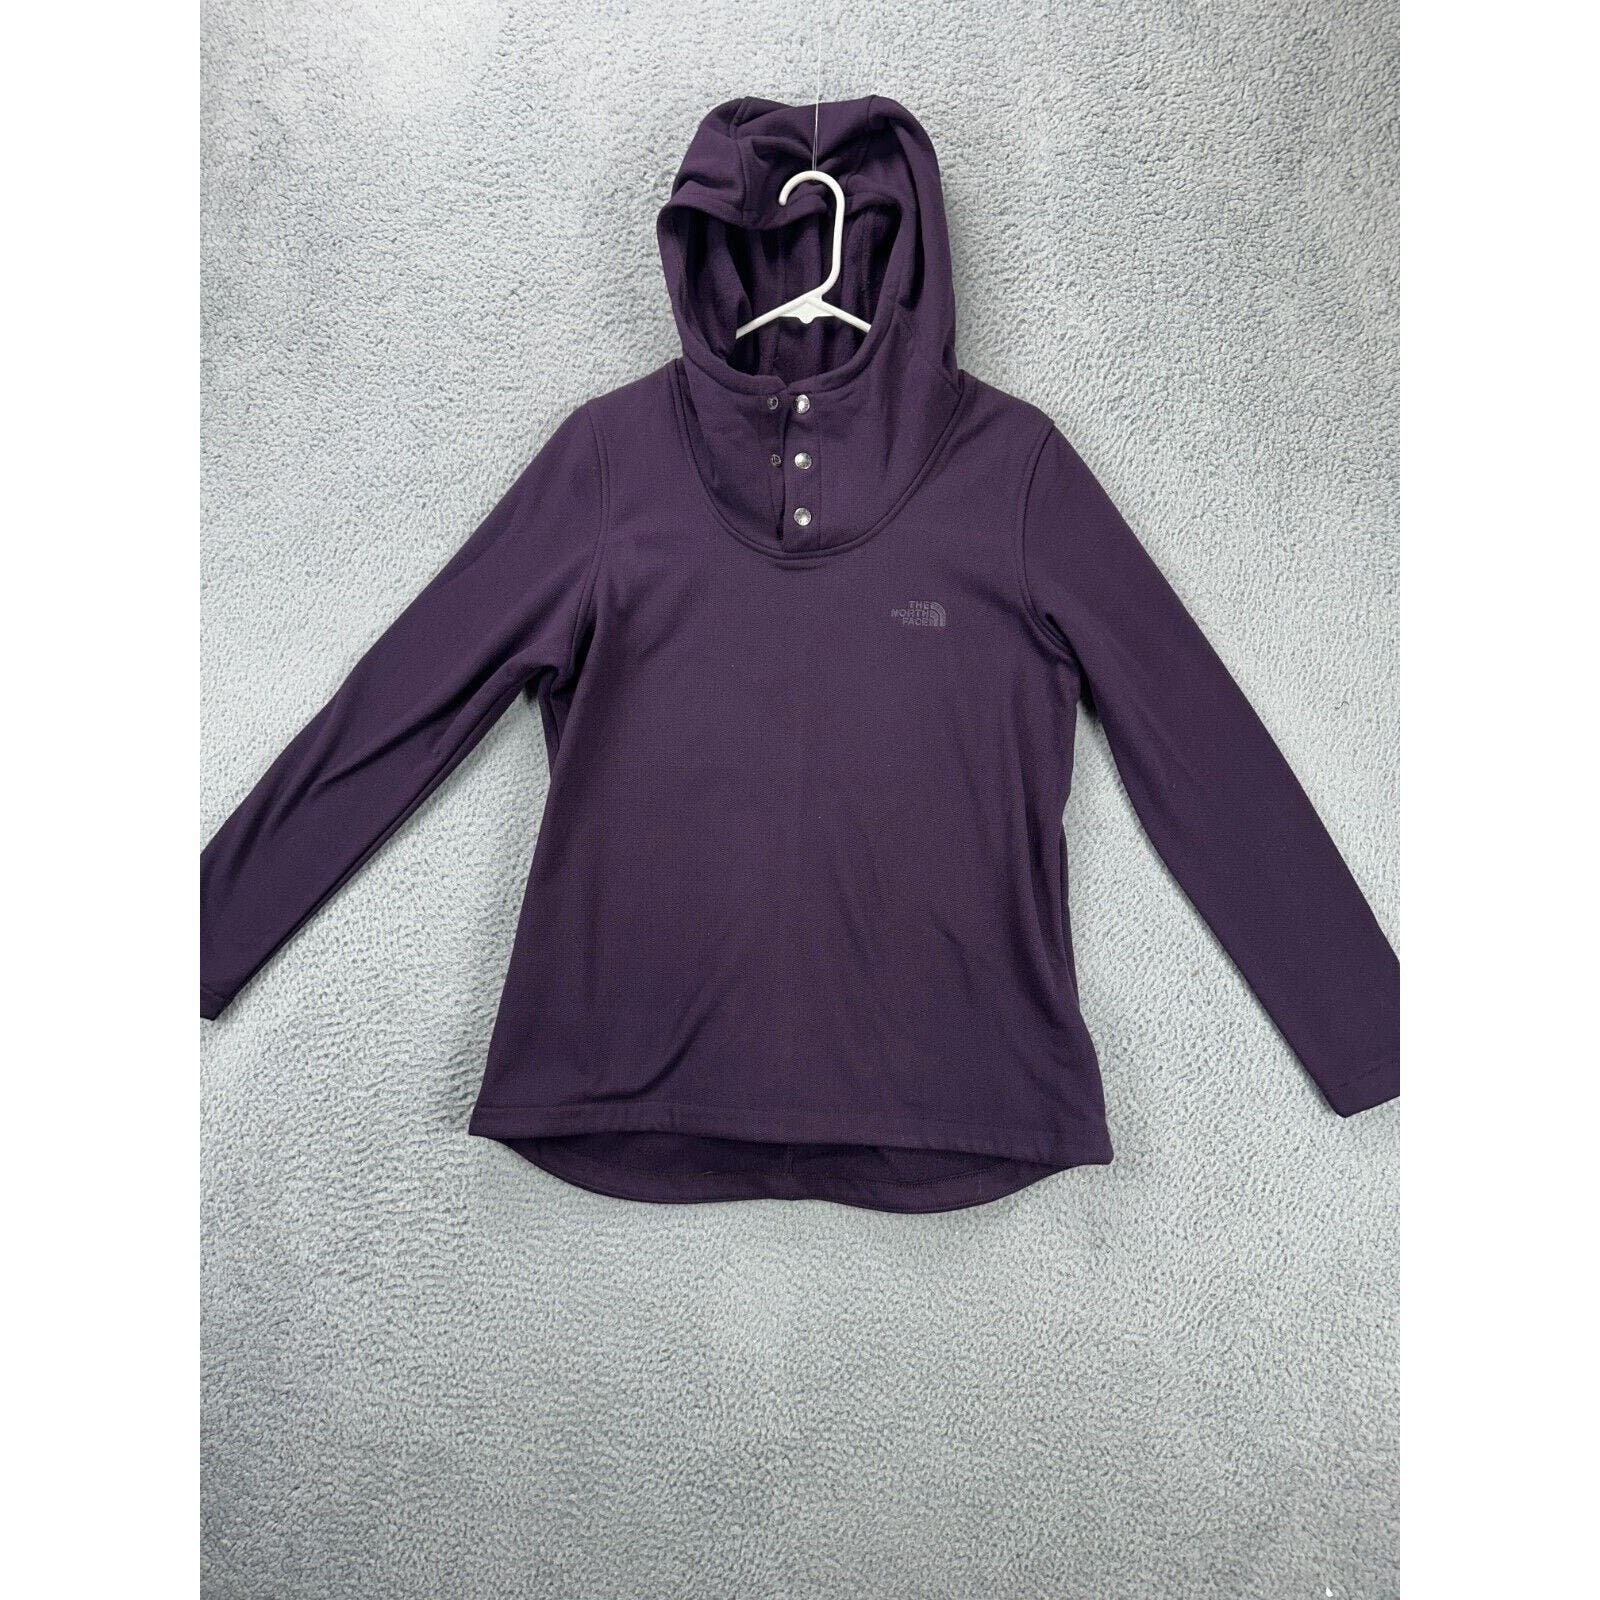 Classic The North Face Shirt Womens Medium Purple Hoode